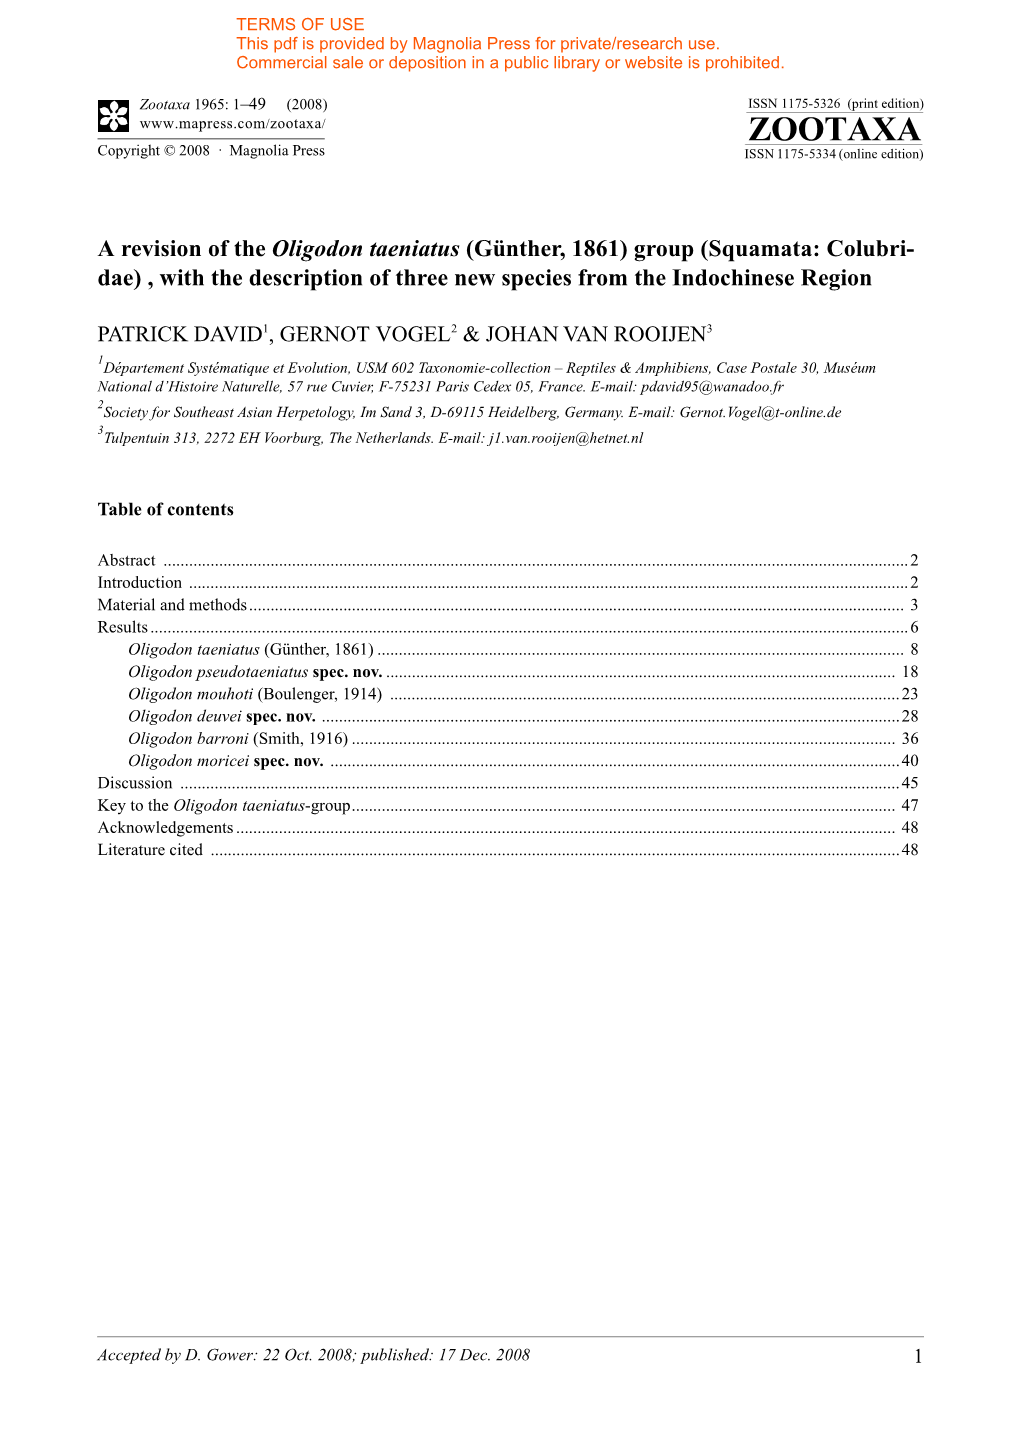 Zootaxa, a Revision of the Oligodon Taeniatus (Gunther, 1861) Group